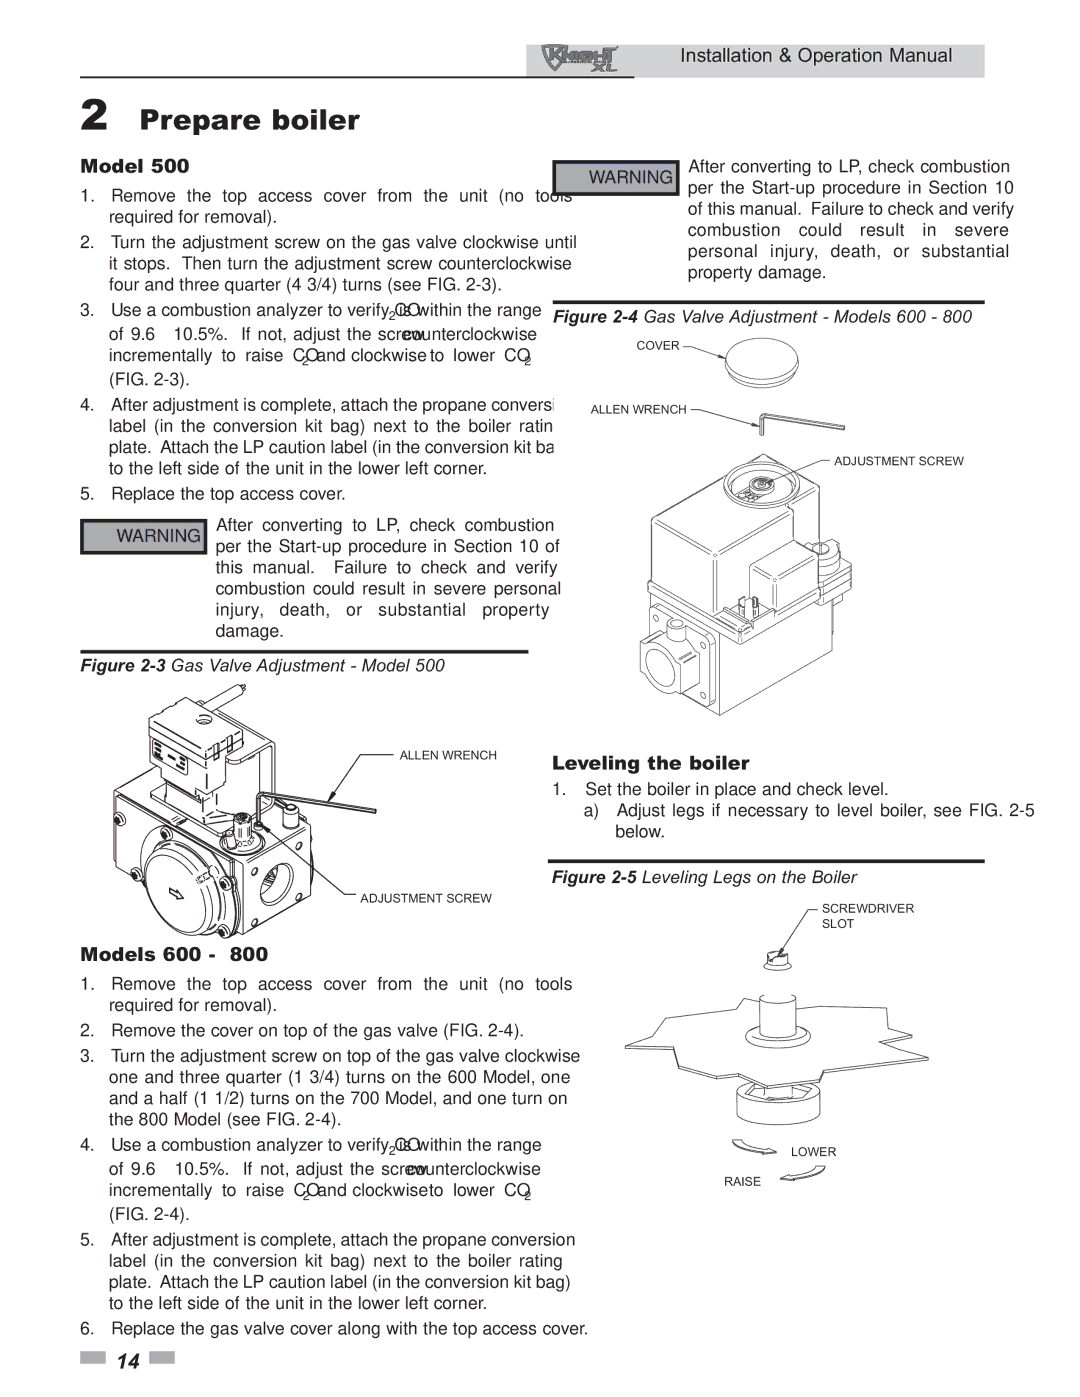 Lochinvar 800 operation manual Leveling the boiler, Models 600 